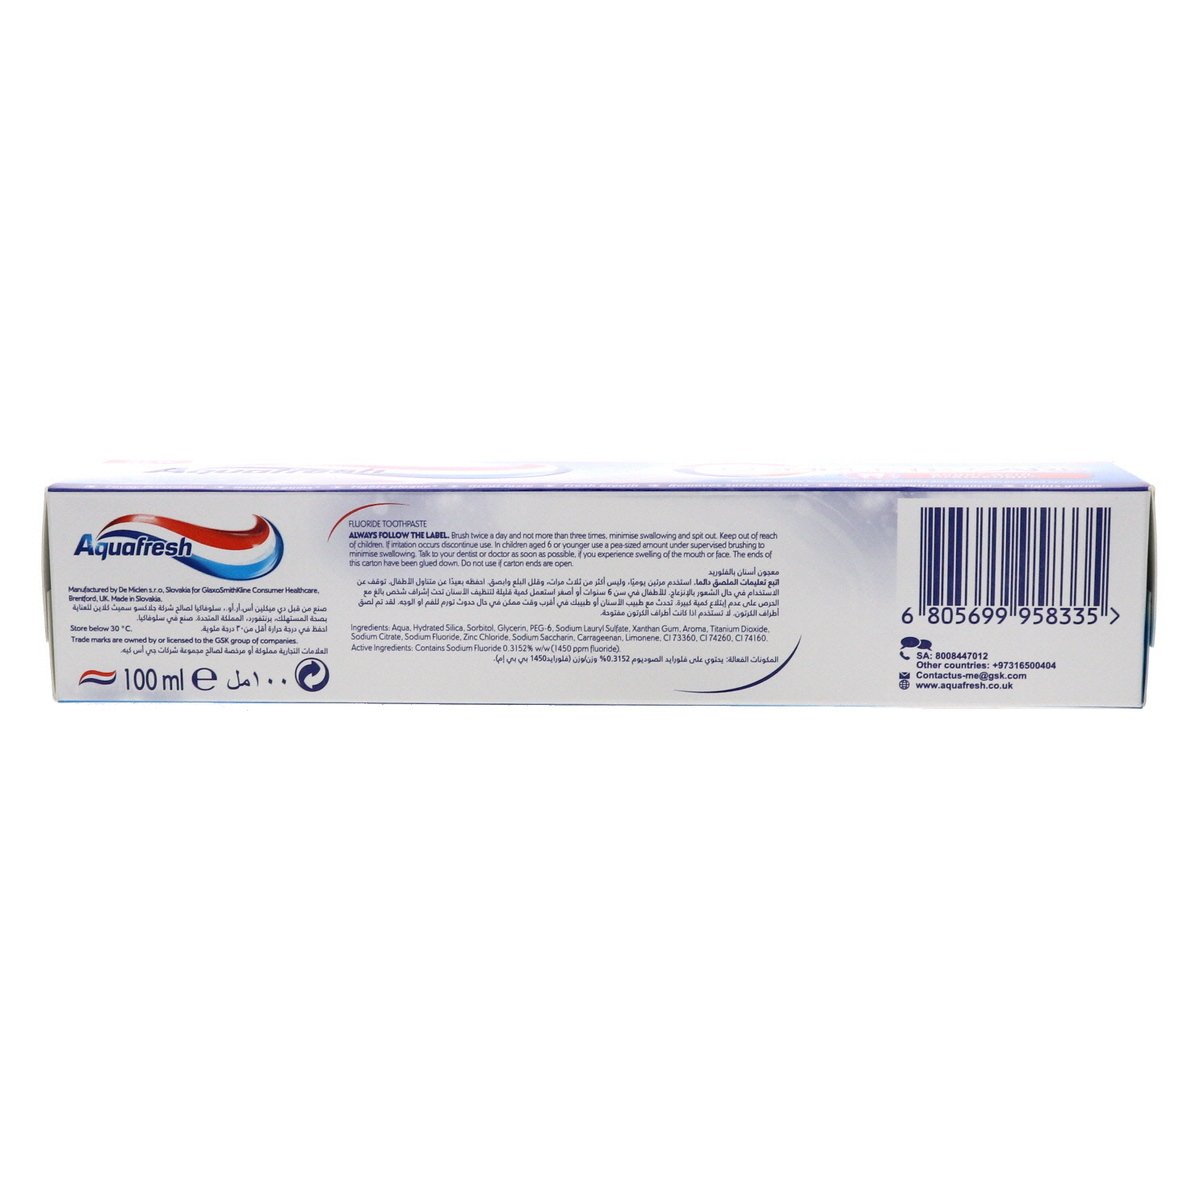 Aquafresh Complete Care Toothpaste 100 ml 2 + 1 Free